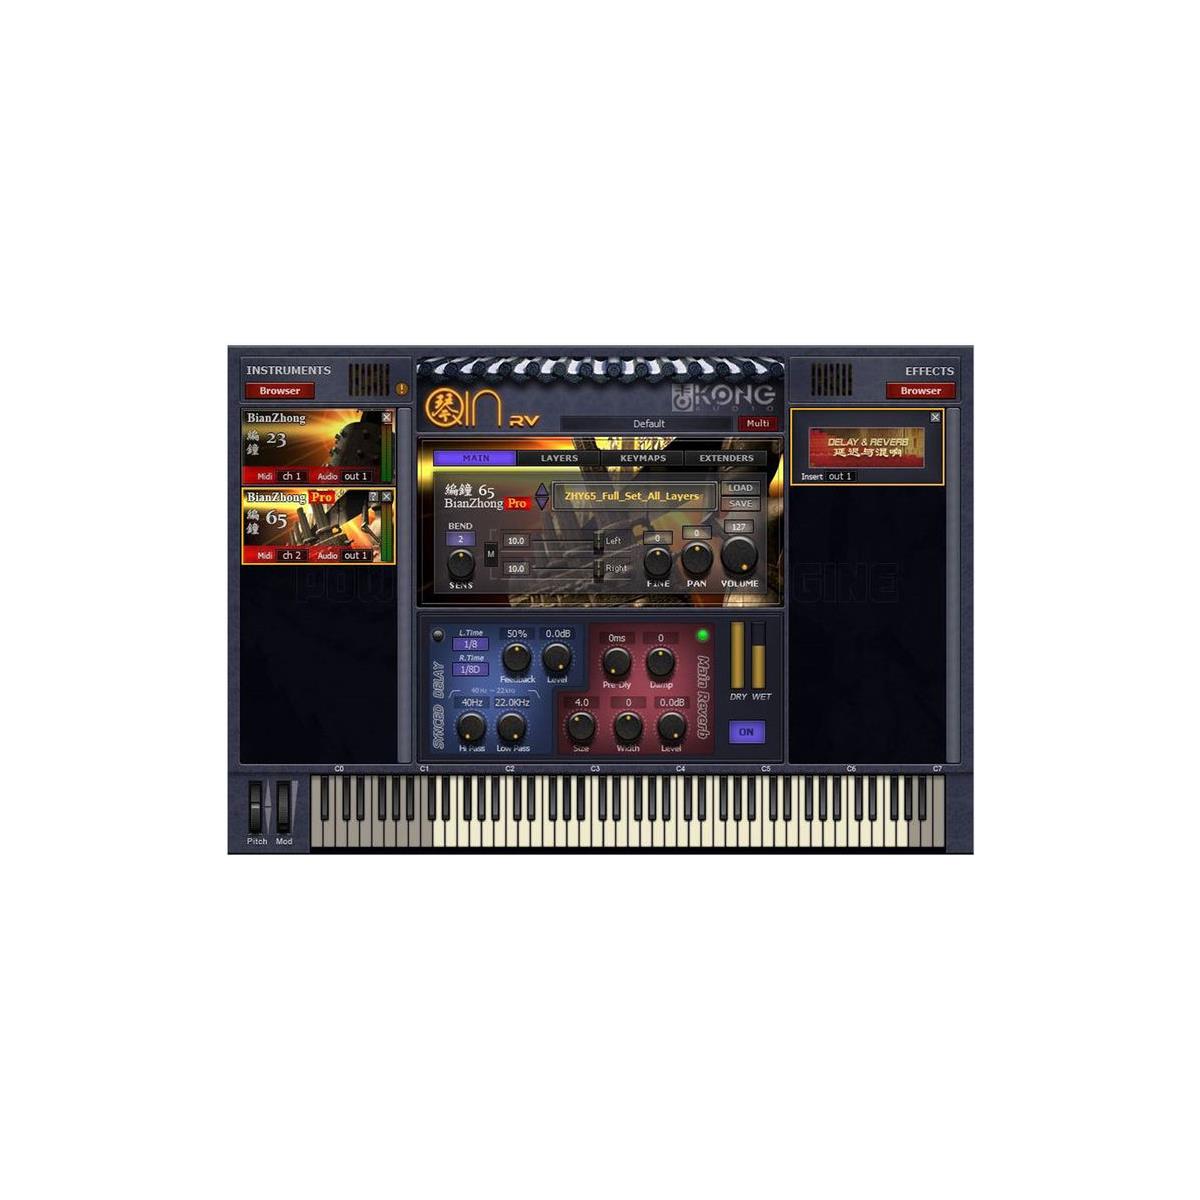 Image of Kong Audio Bian Zhong Pro Virtual Instrument Software